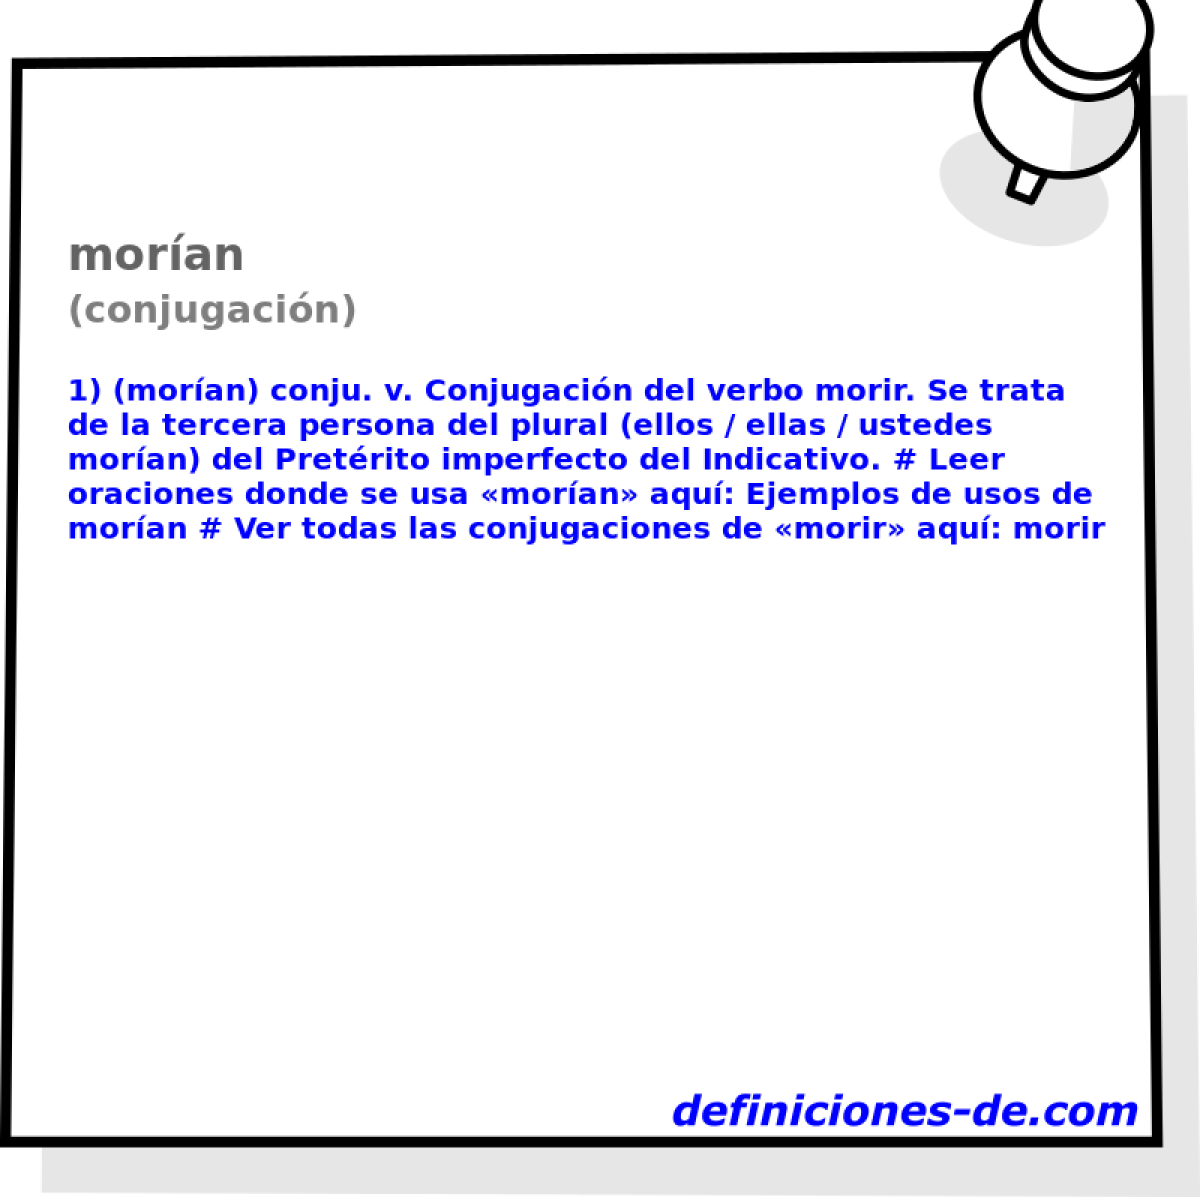 moran (conjugacin)